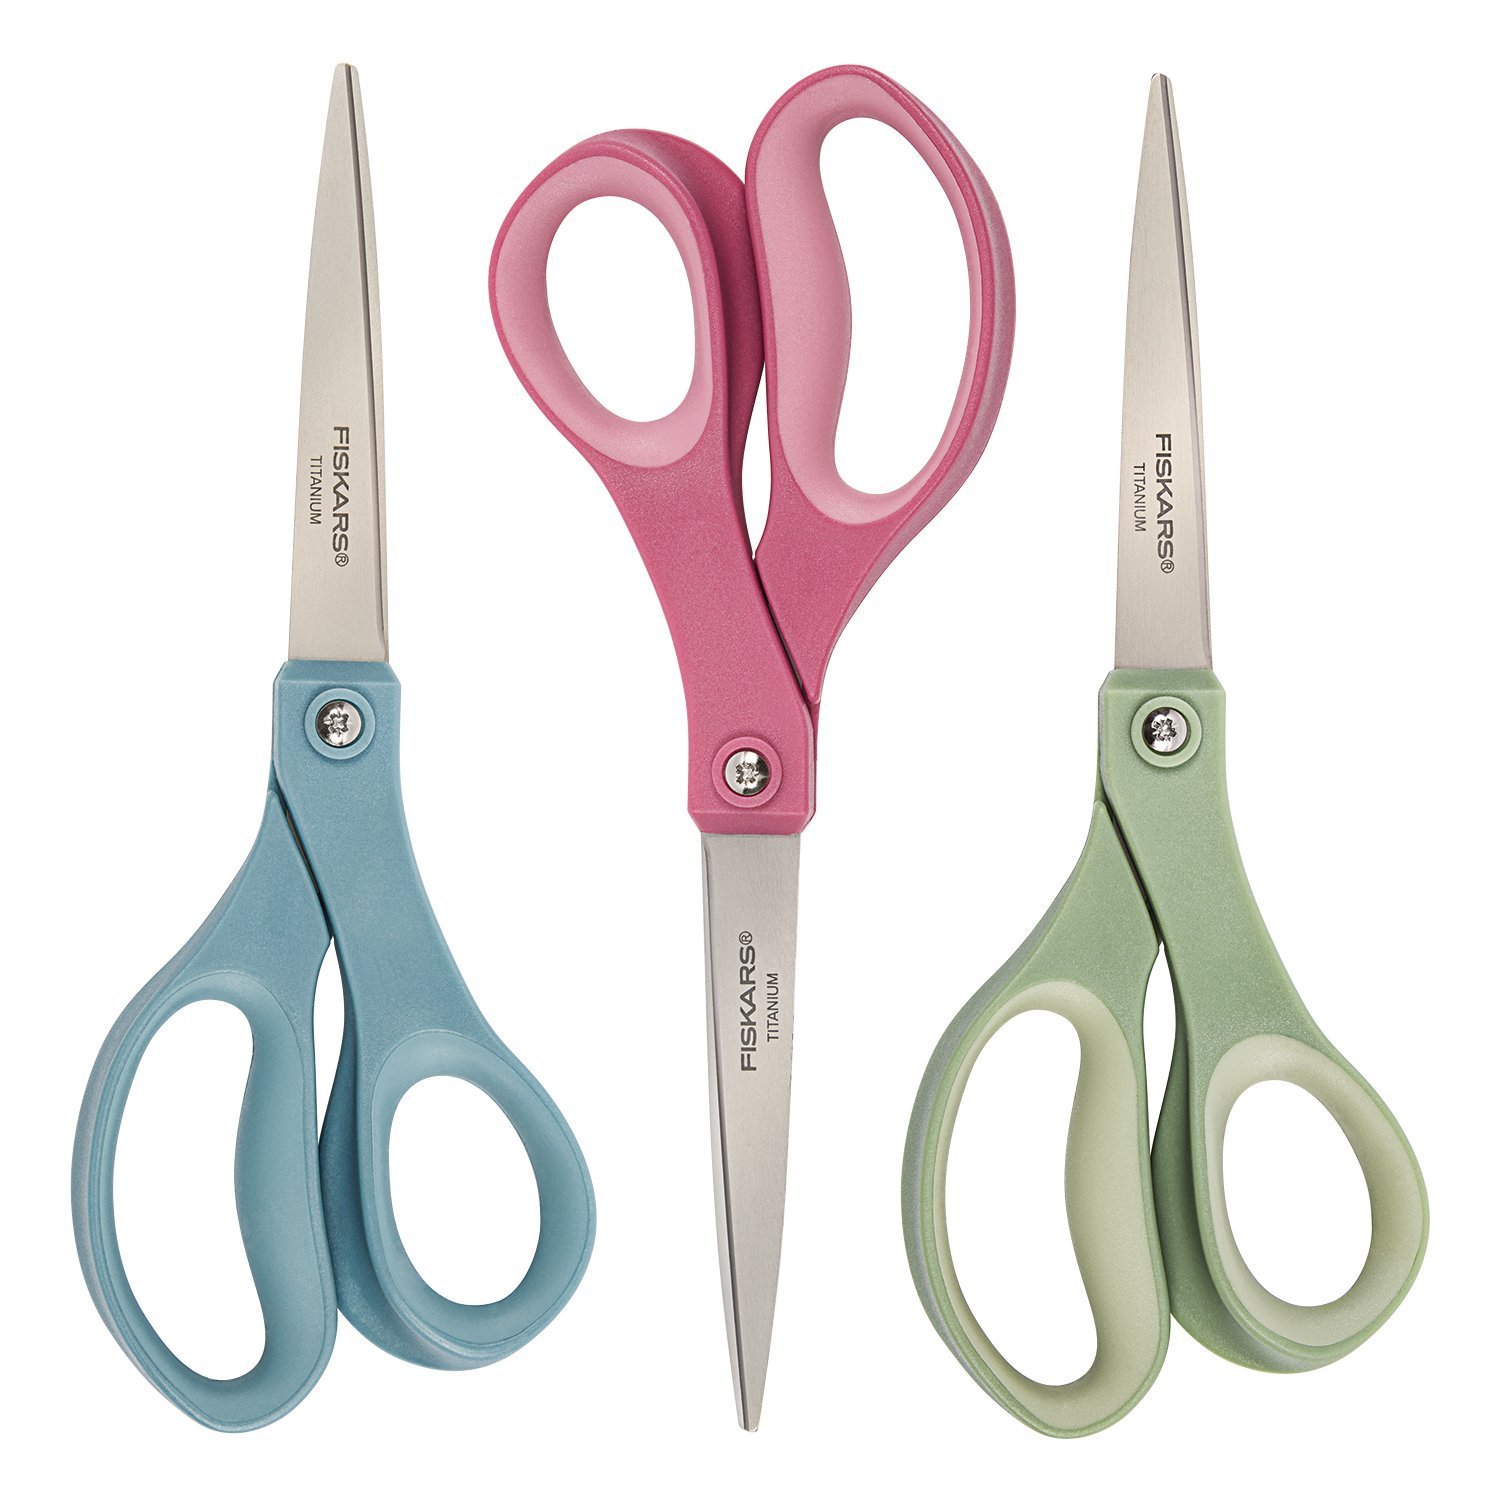 Fiskars Kids Scissors, Pointed-Tip, 5 inch, 3 Pack, Light Blue, Pink Fashion, Pink